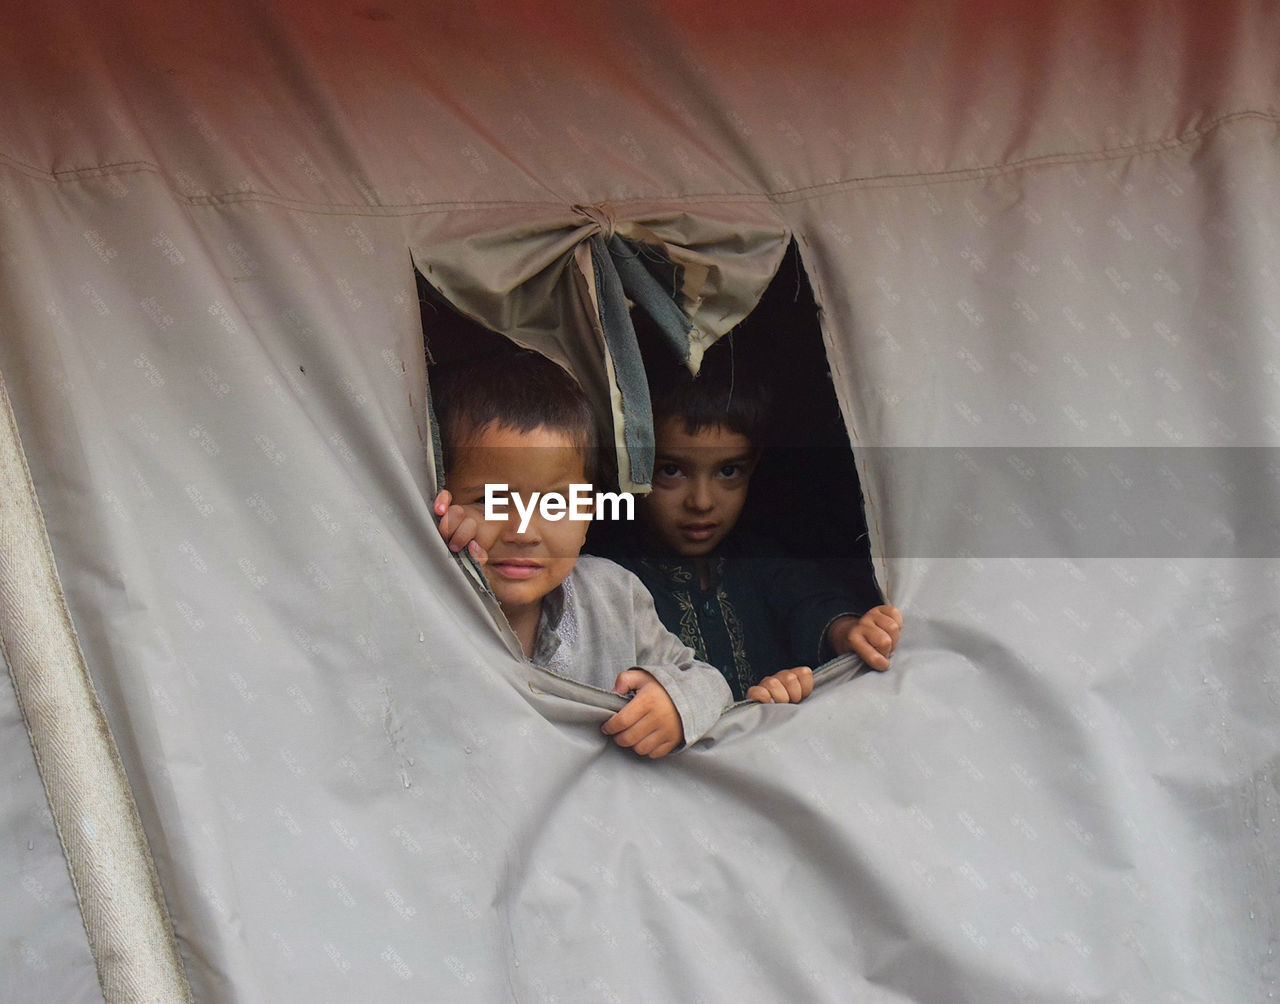 Portrait of cute boys in tent